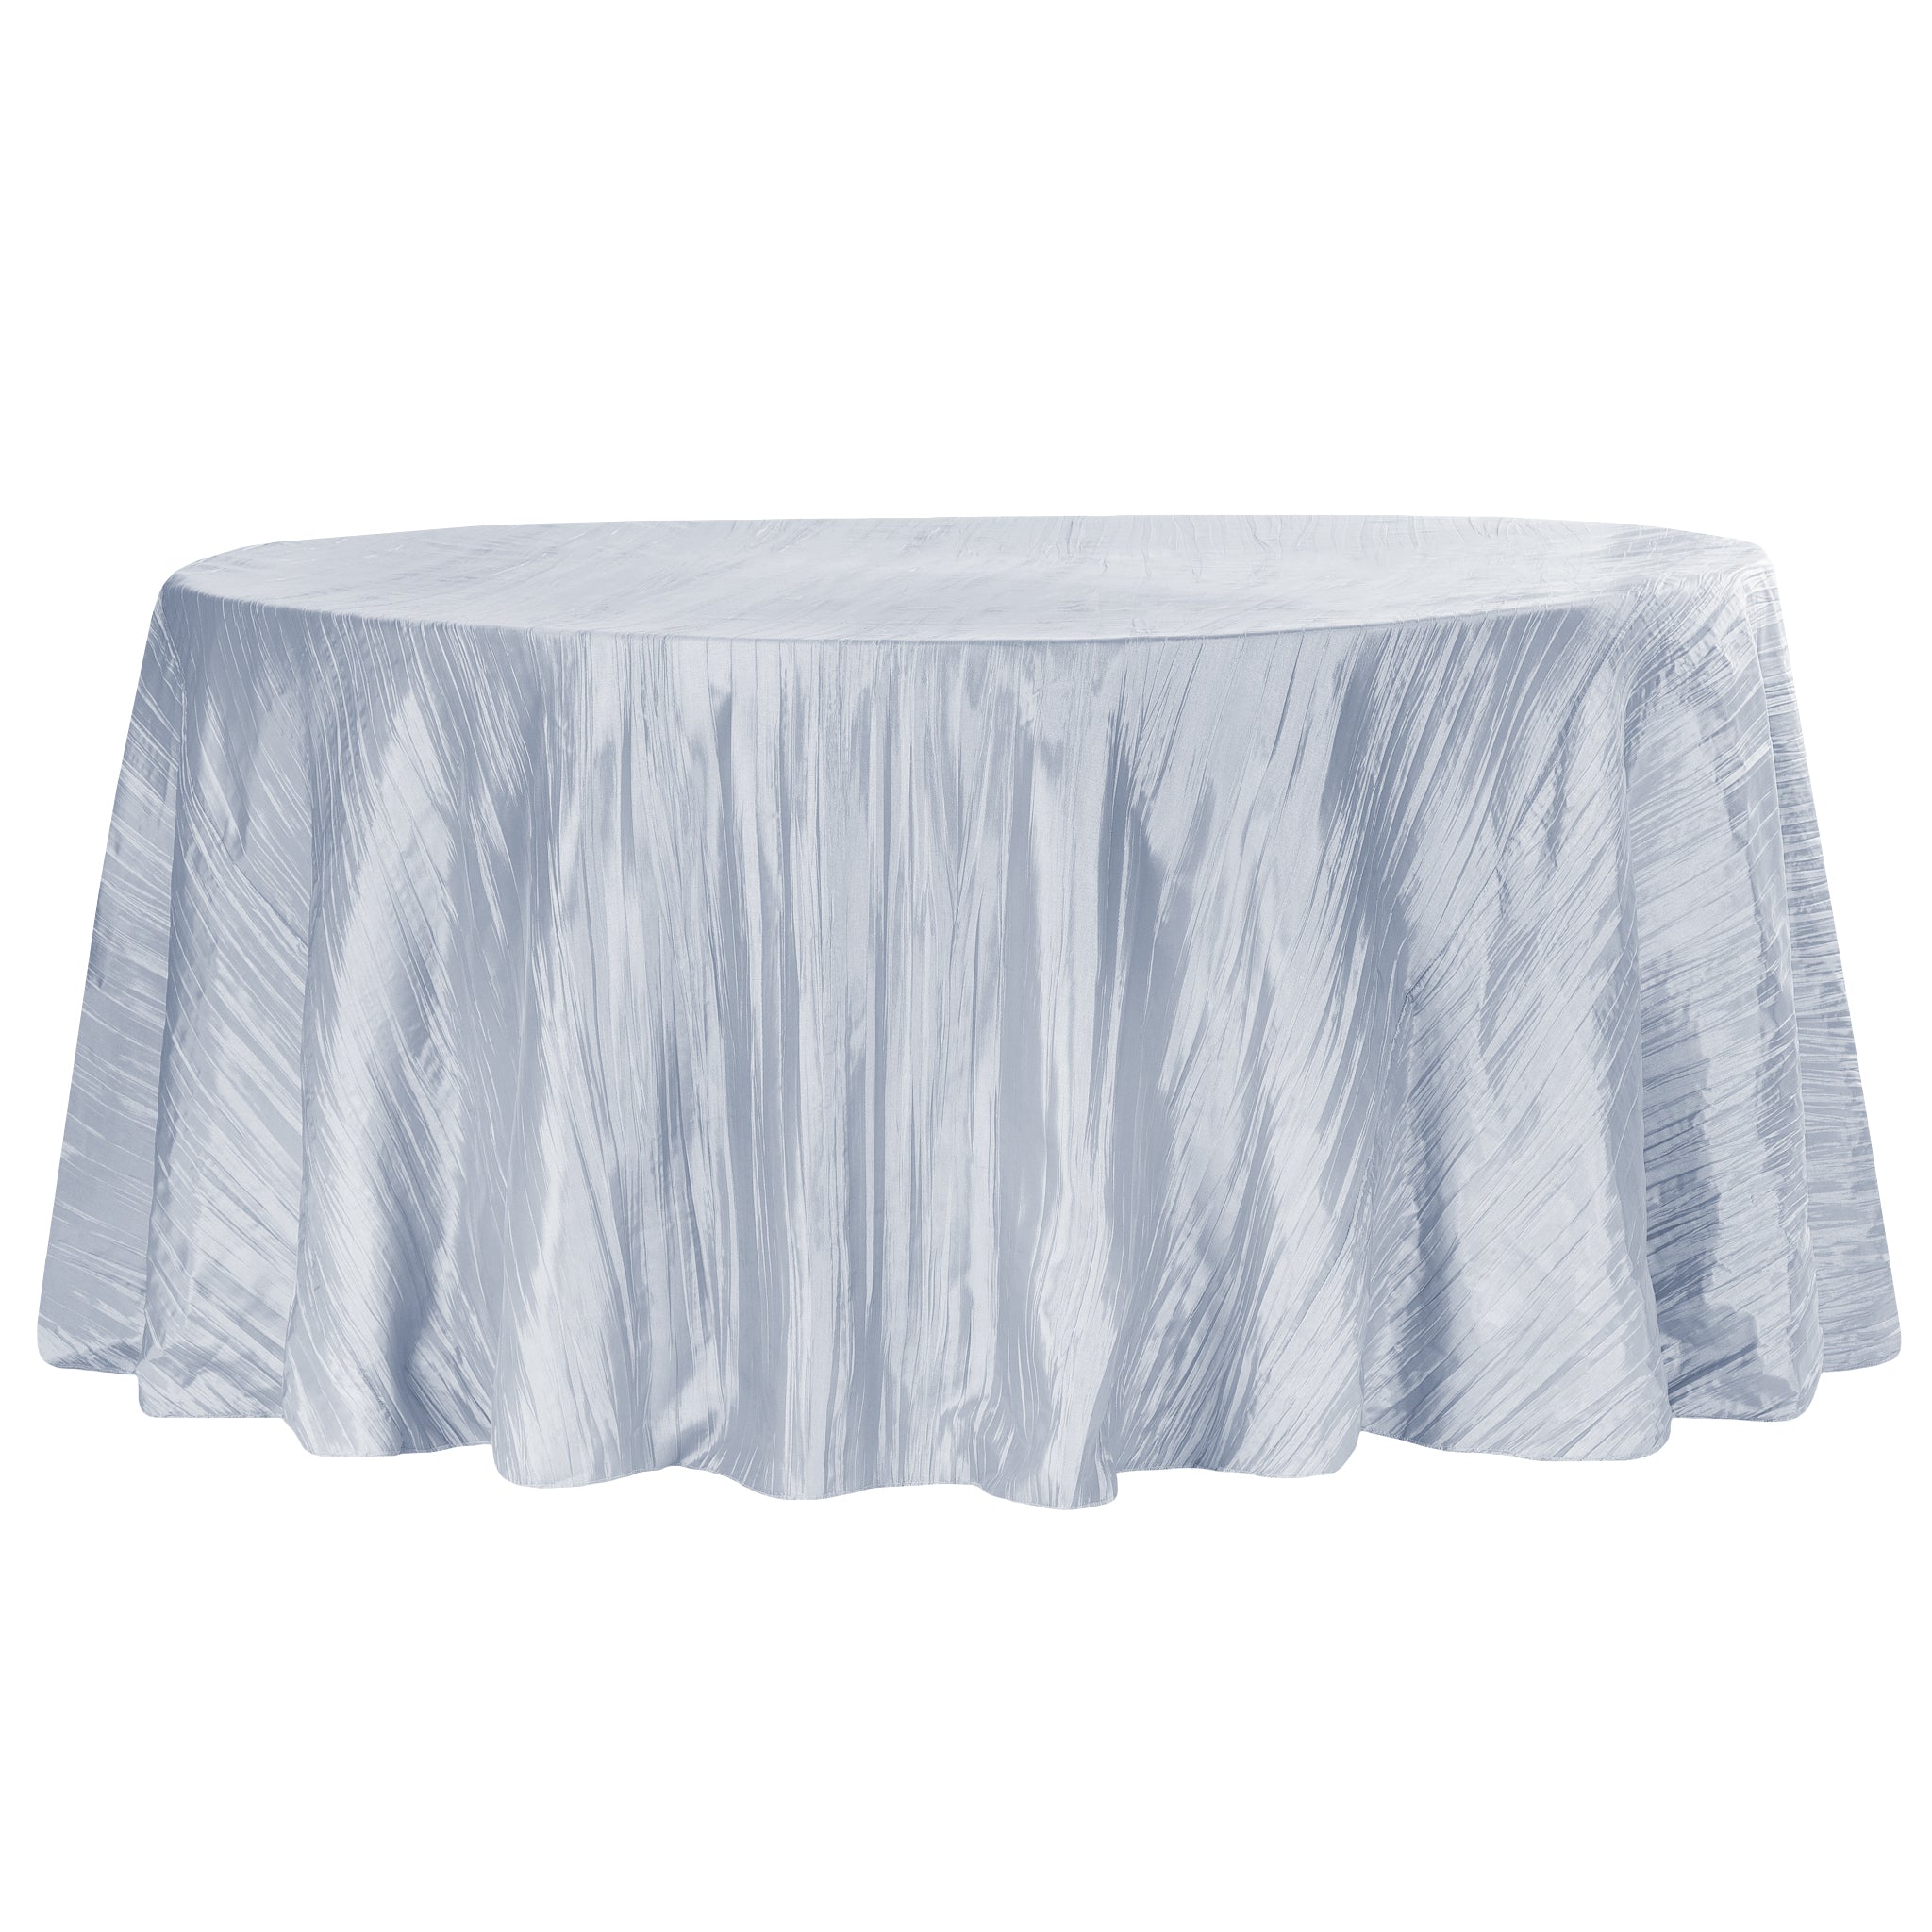 Taffeta 132" Round Tablecloth wholesale